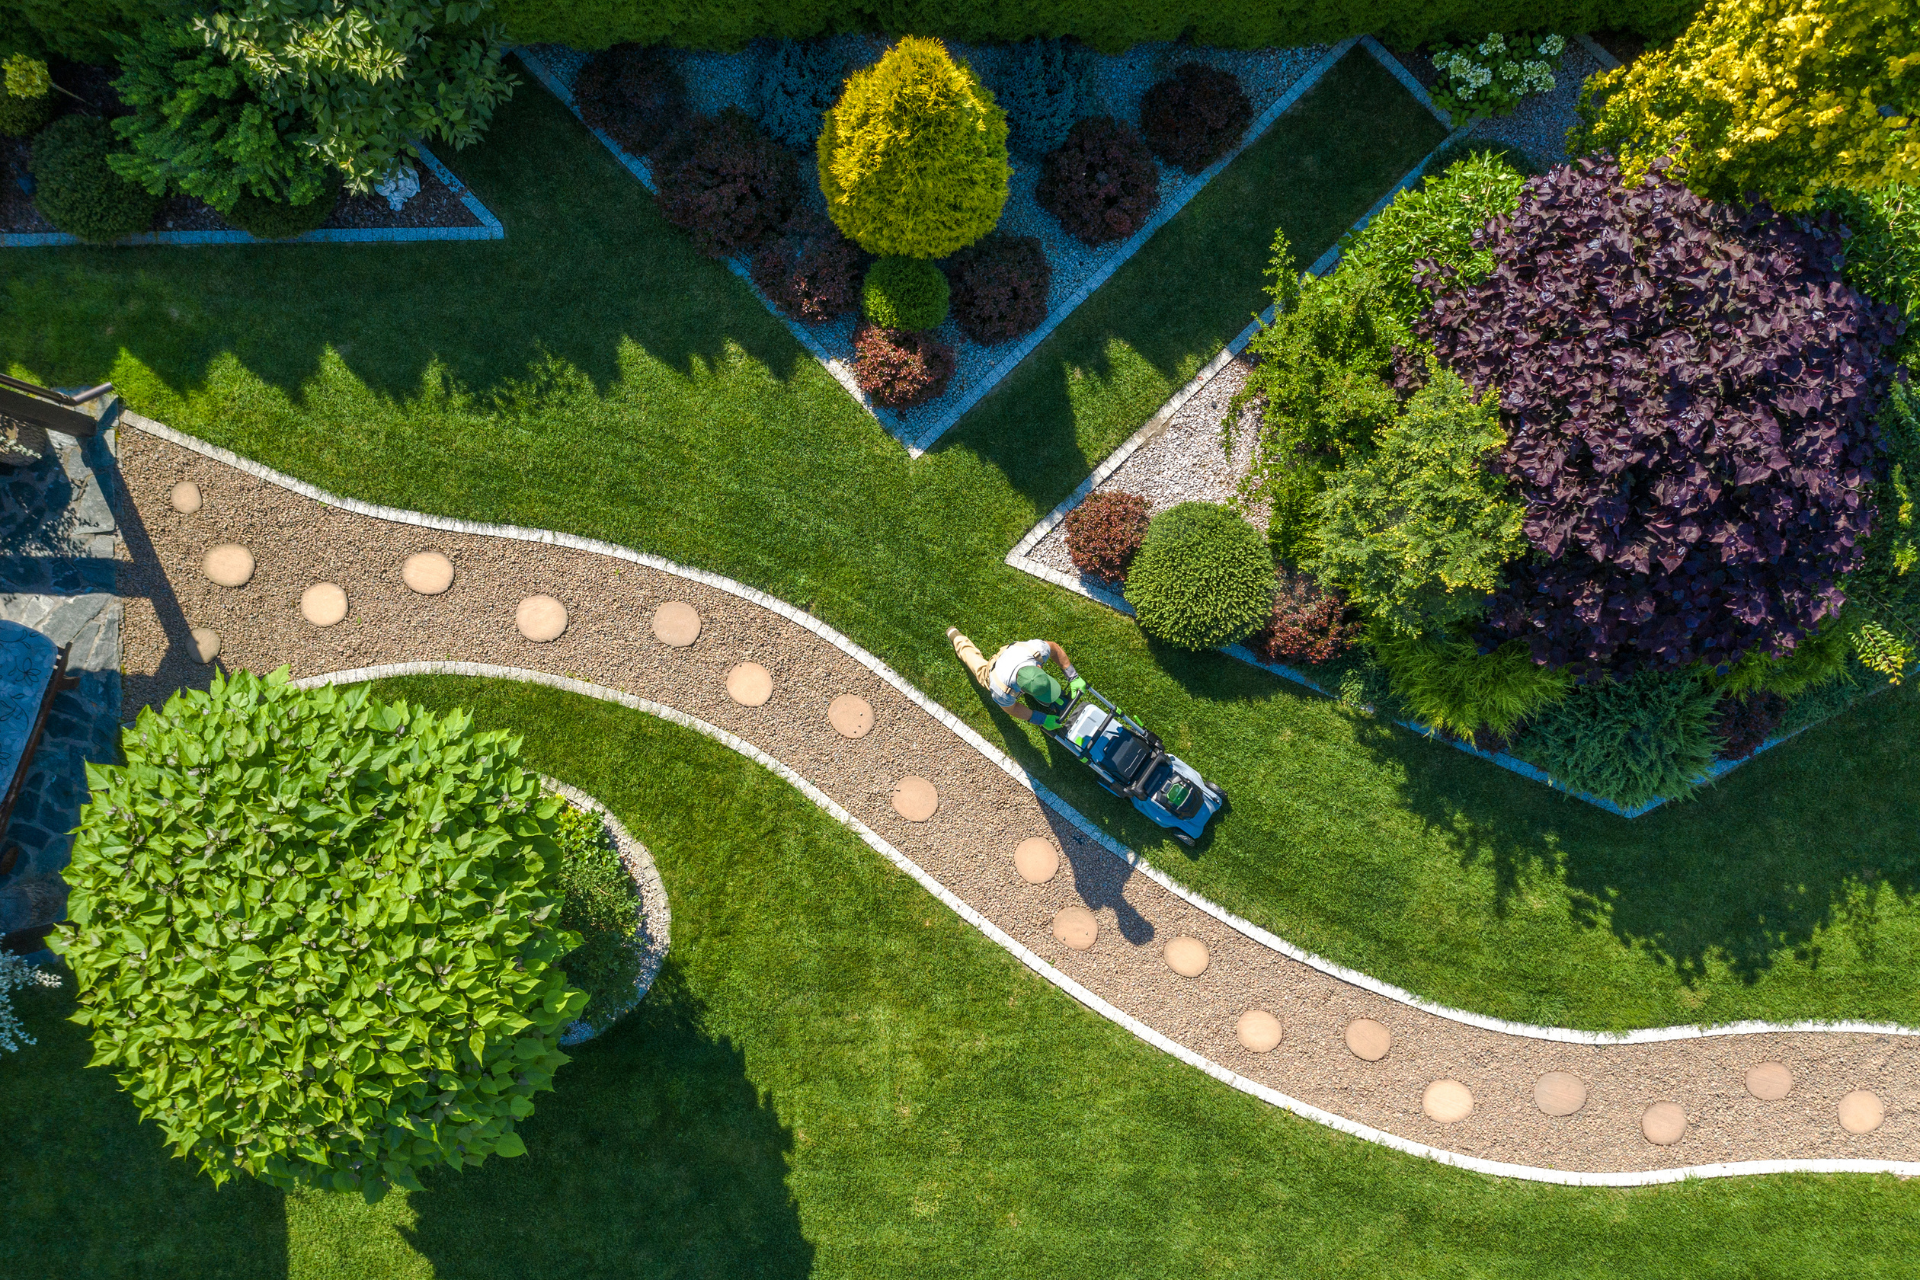 Landscaper using a grass mower to trim a backyard's lawn